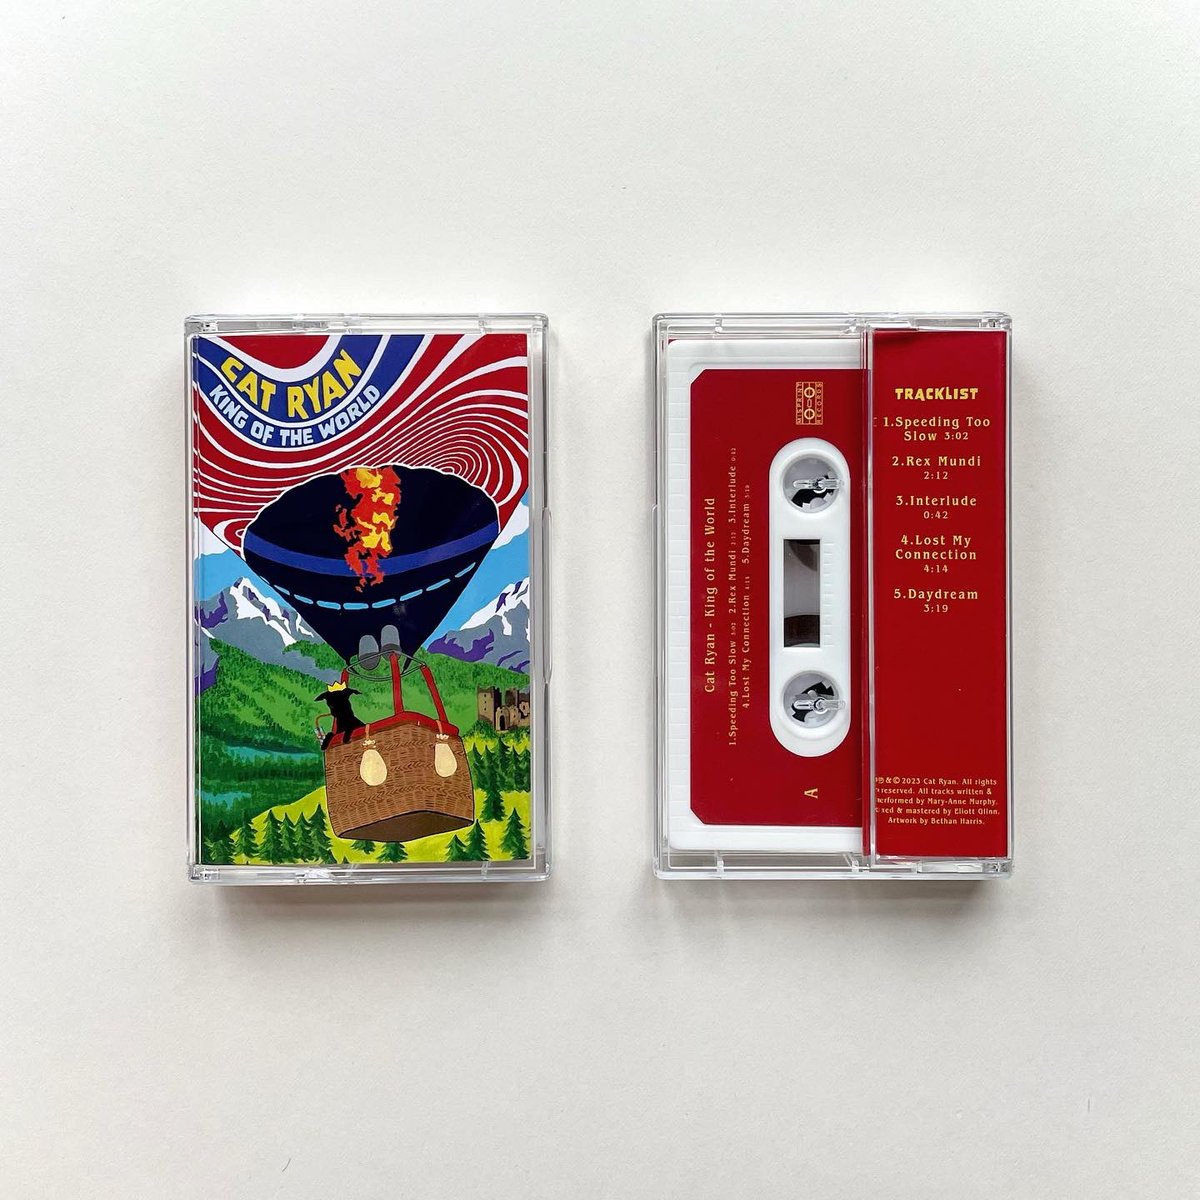 KOTW cassettes have arrived! If ur old school, click the link below 😎 catryanband.myshopify.com